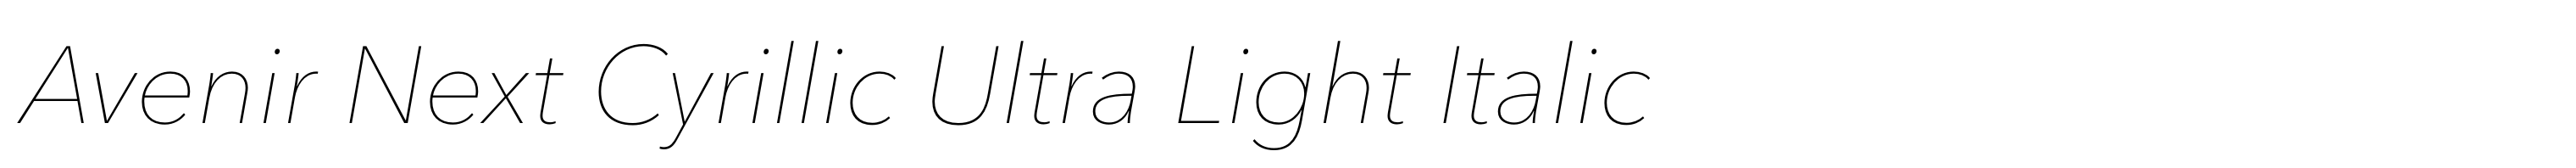 Avenir Next Cyrillic Ultra Light Italic